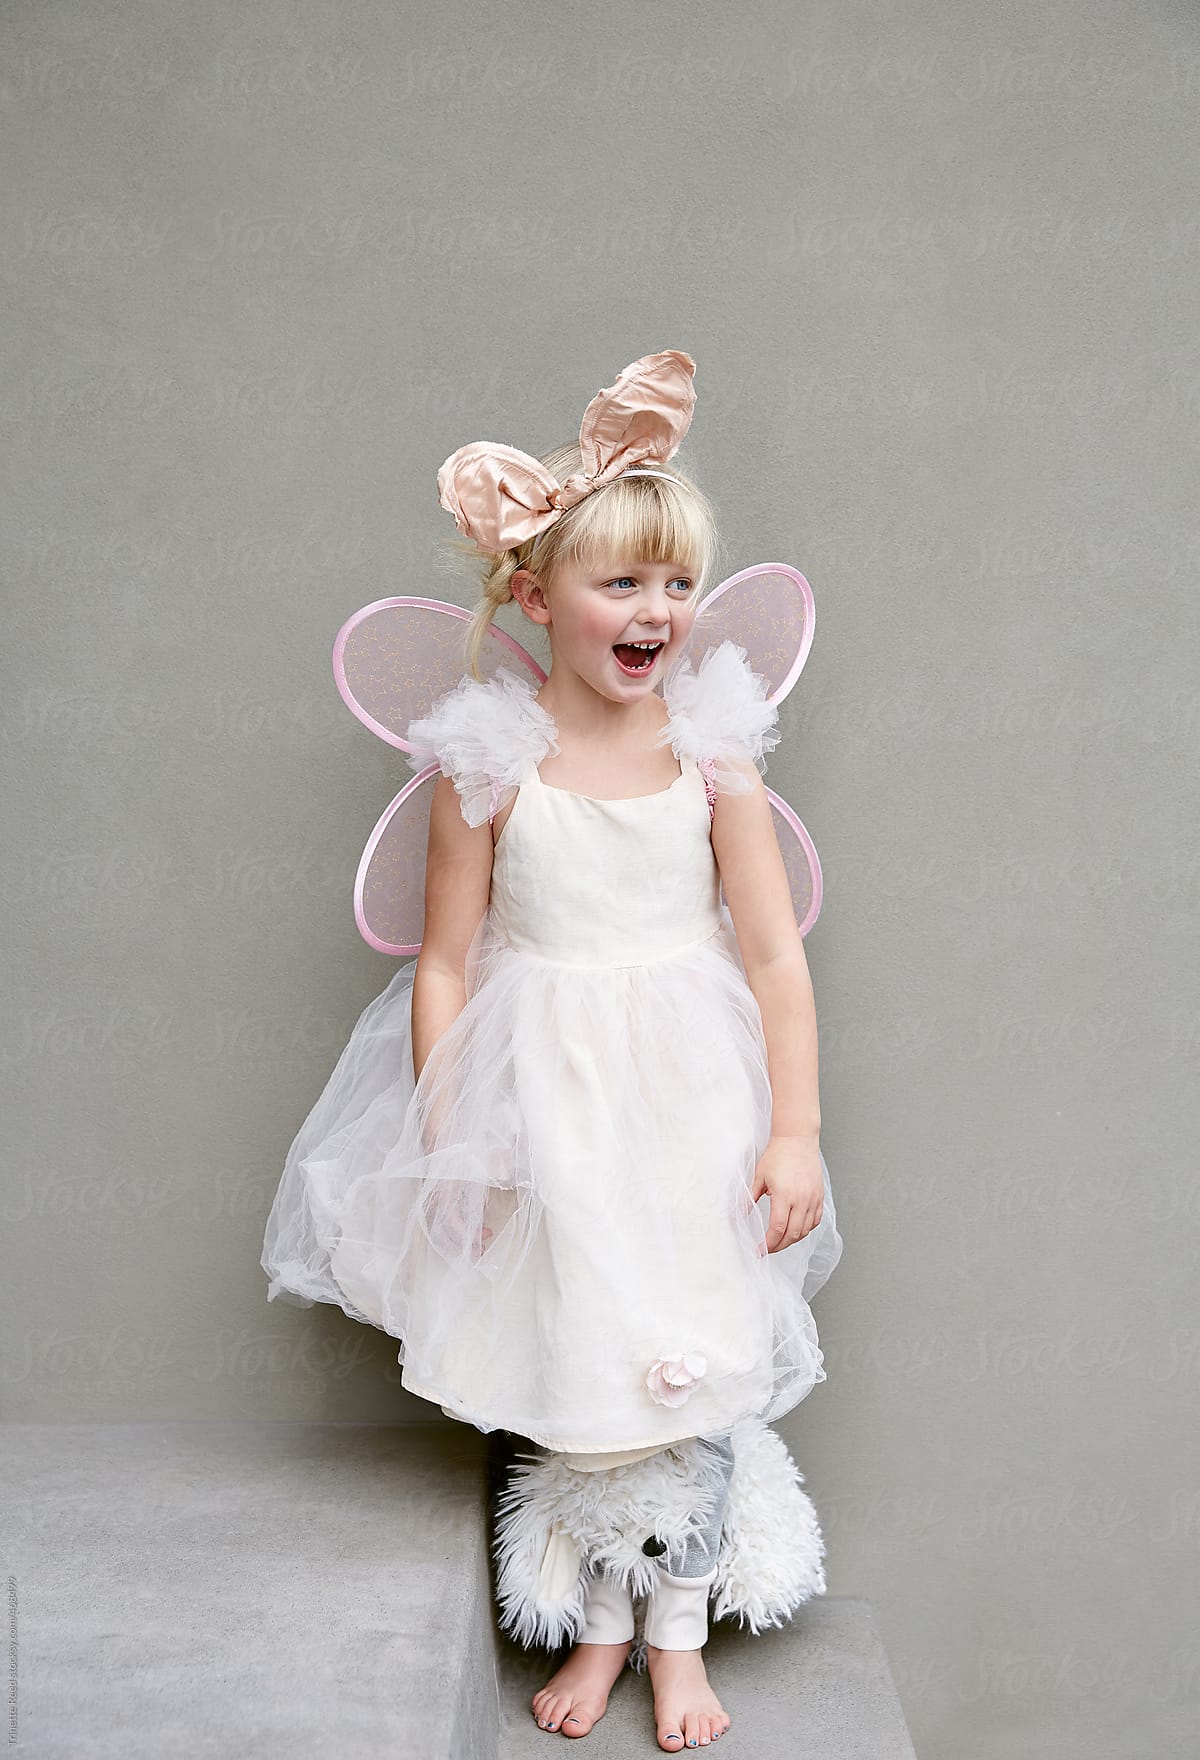 Portrait of surprised cute little girl in angel costume.